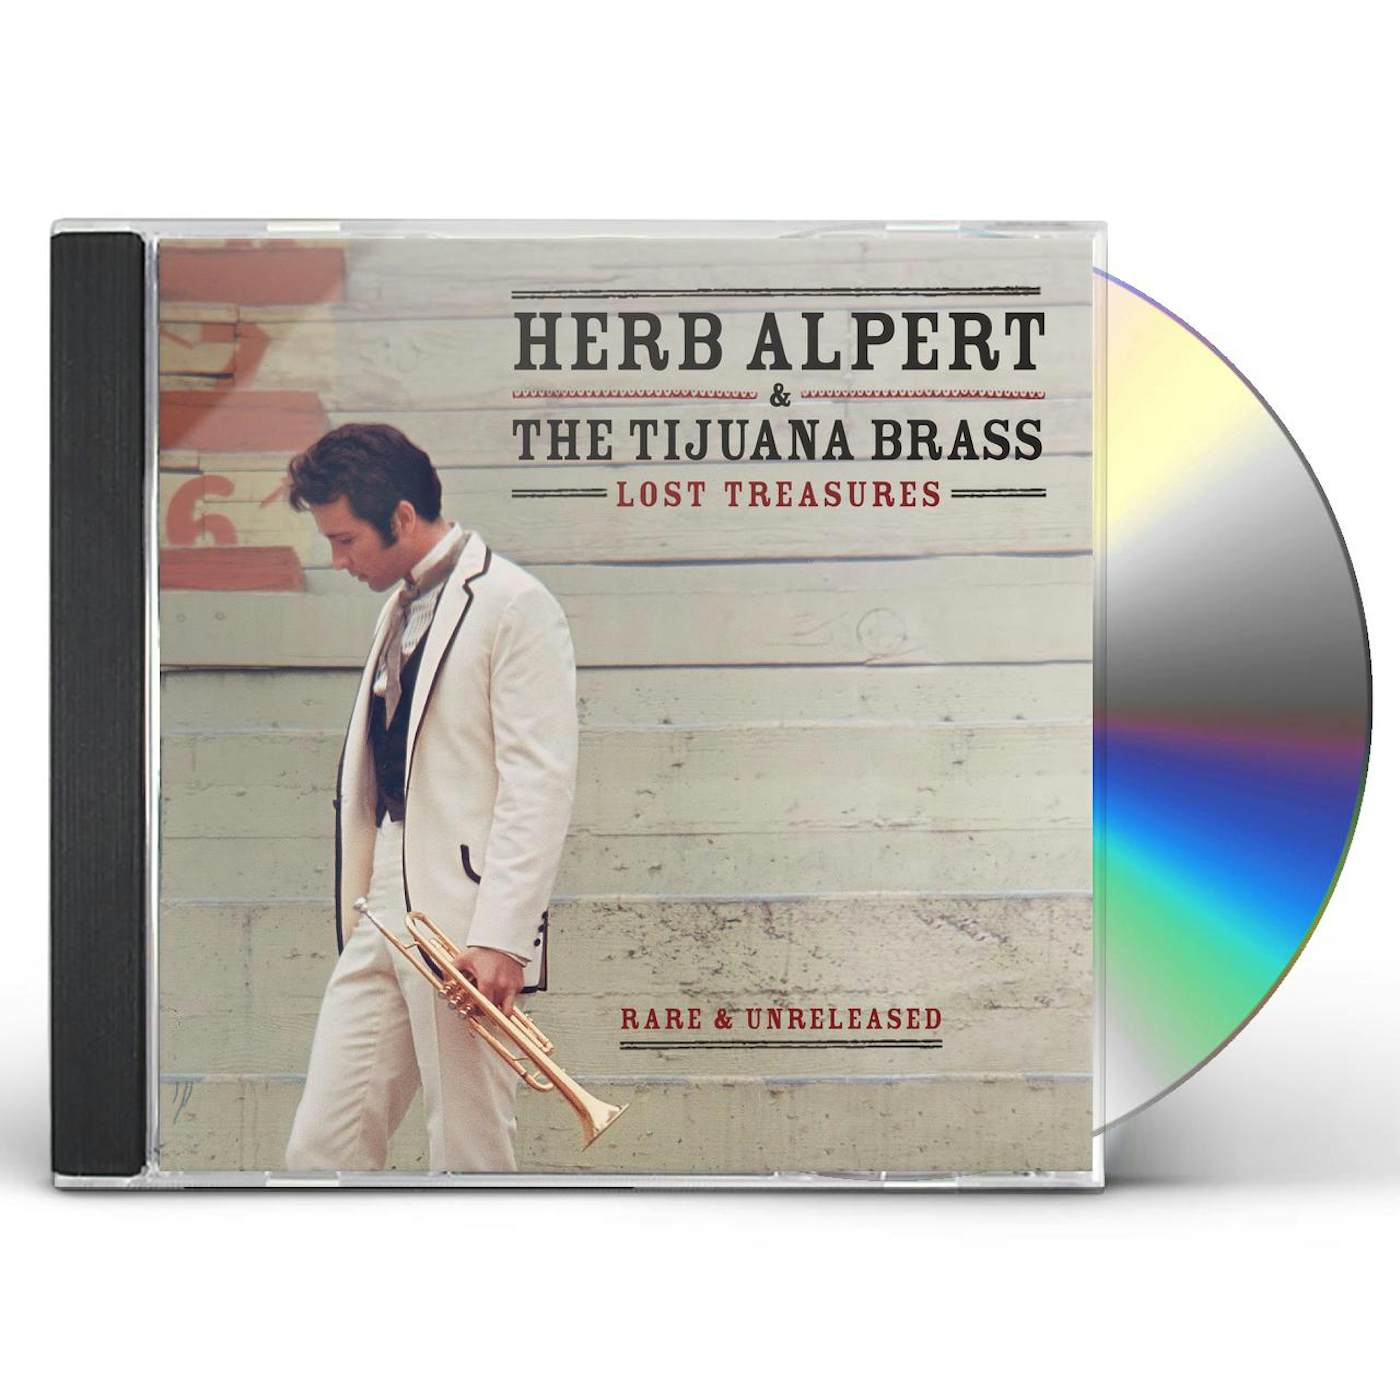 Herb Alpert LOST TREASURES CD